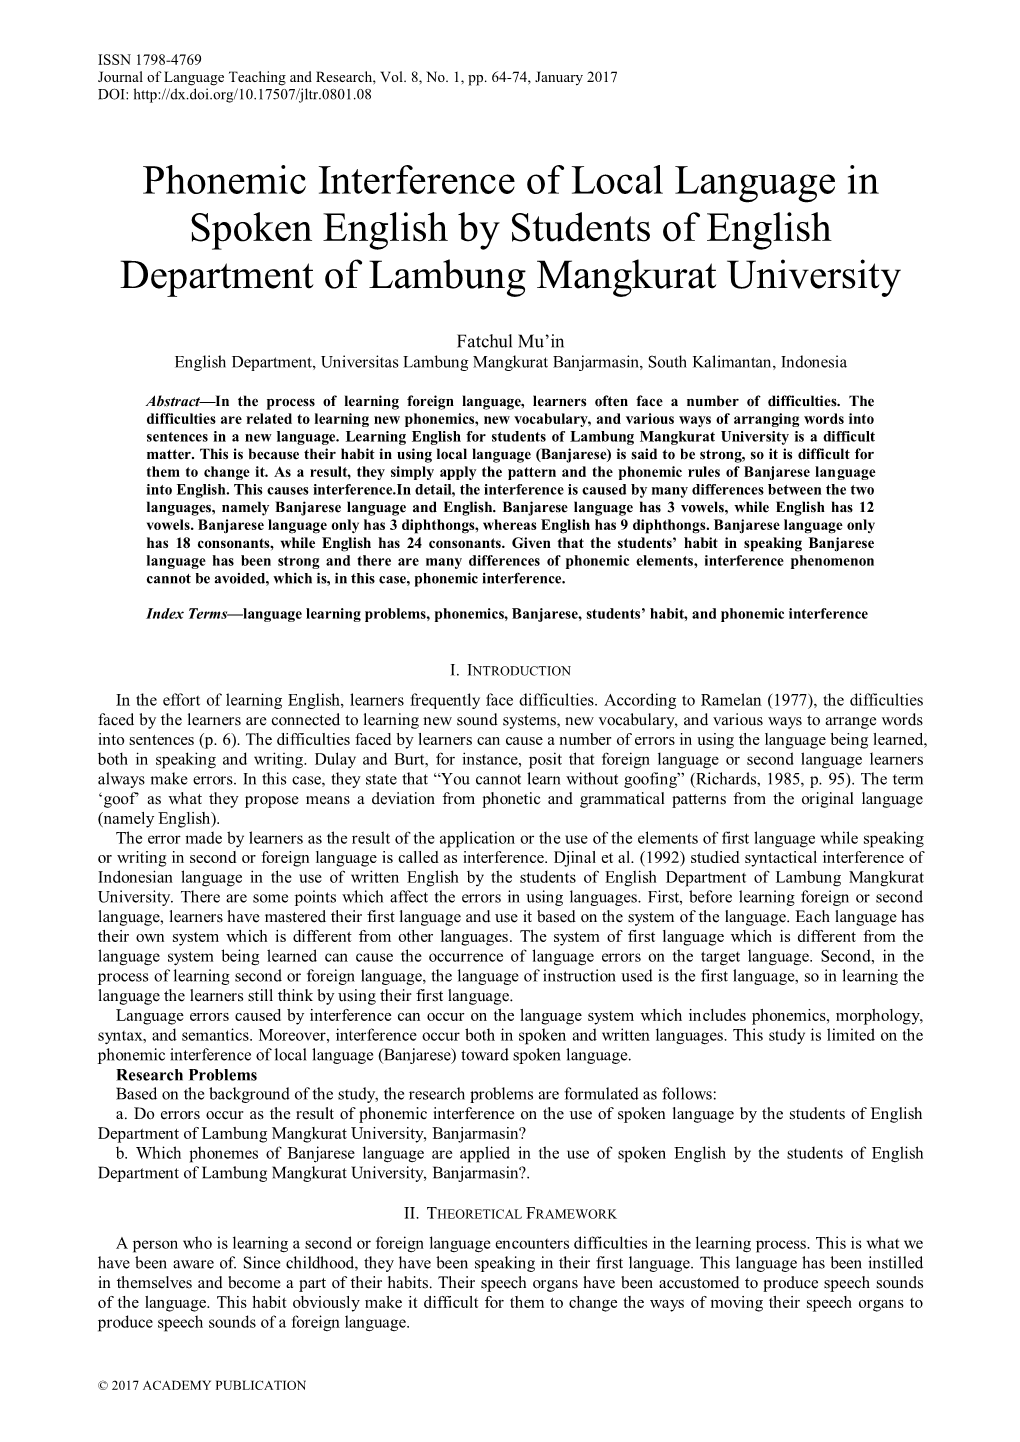 Phonemic Interference of Local Language in Spoken English by Students of English Department of Lambung Mangkurat University